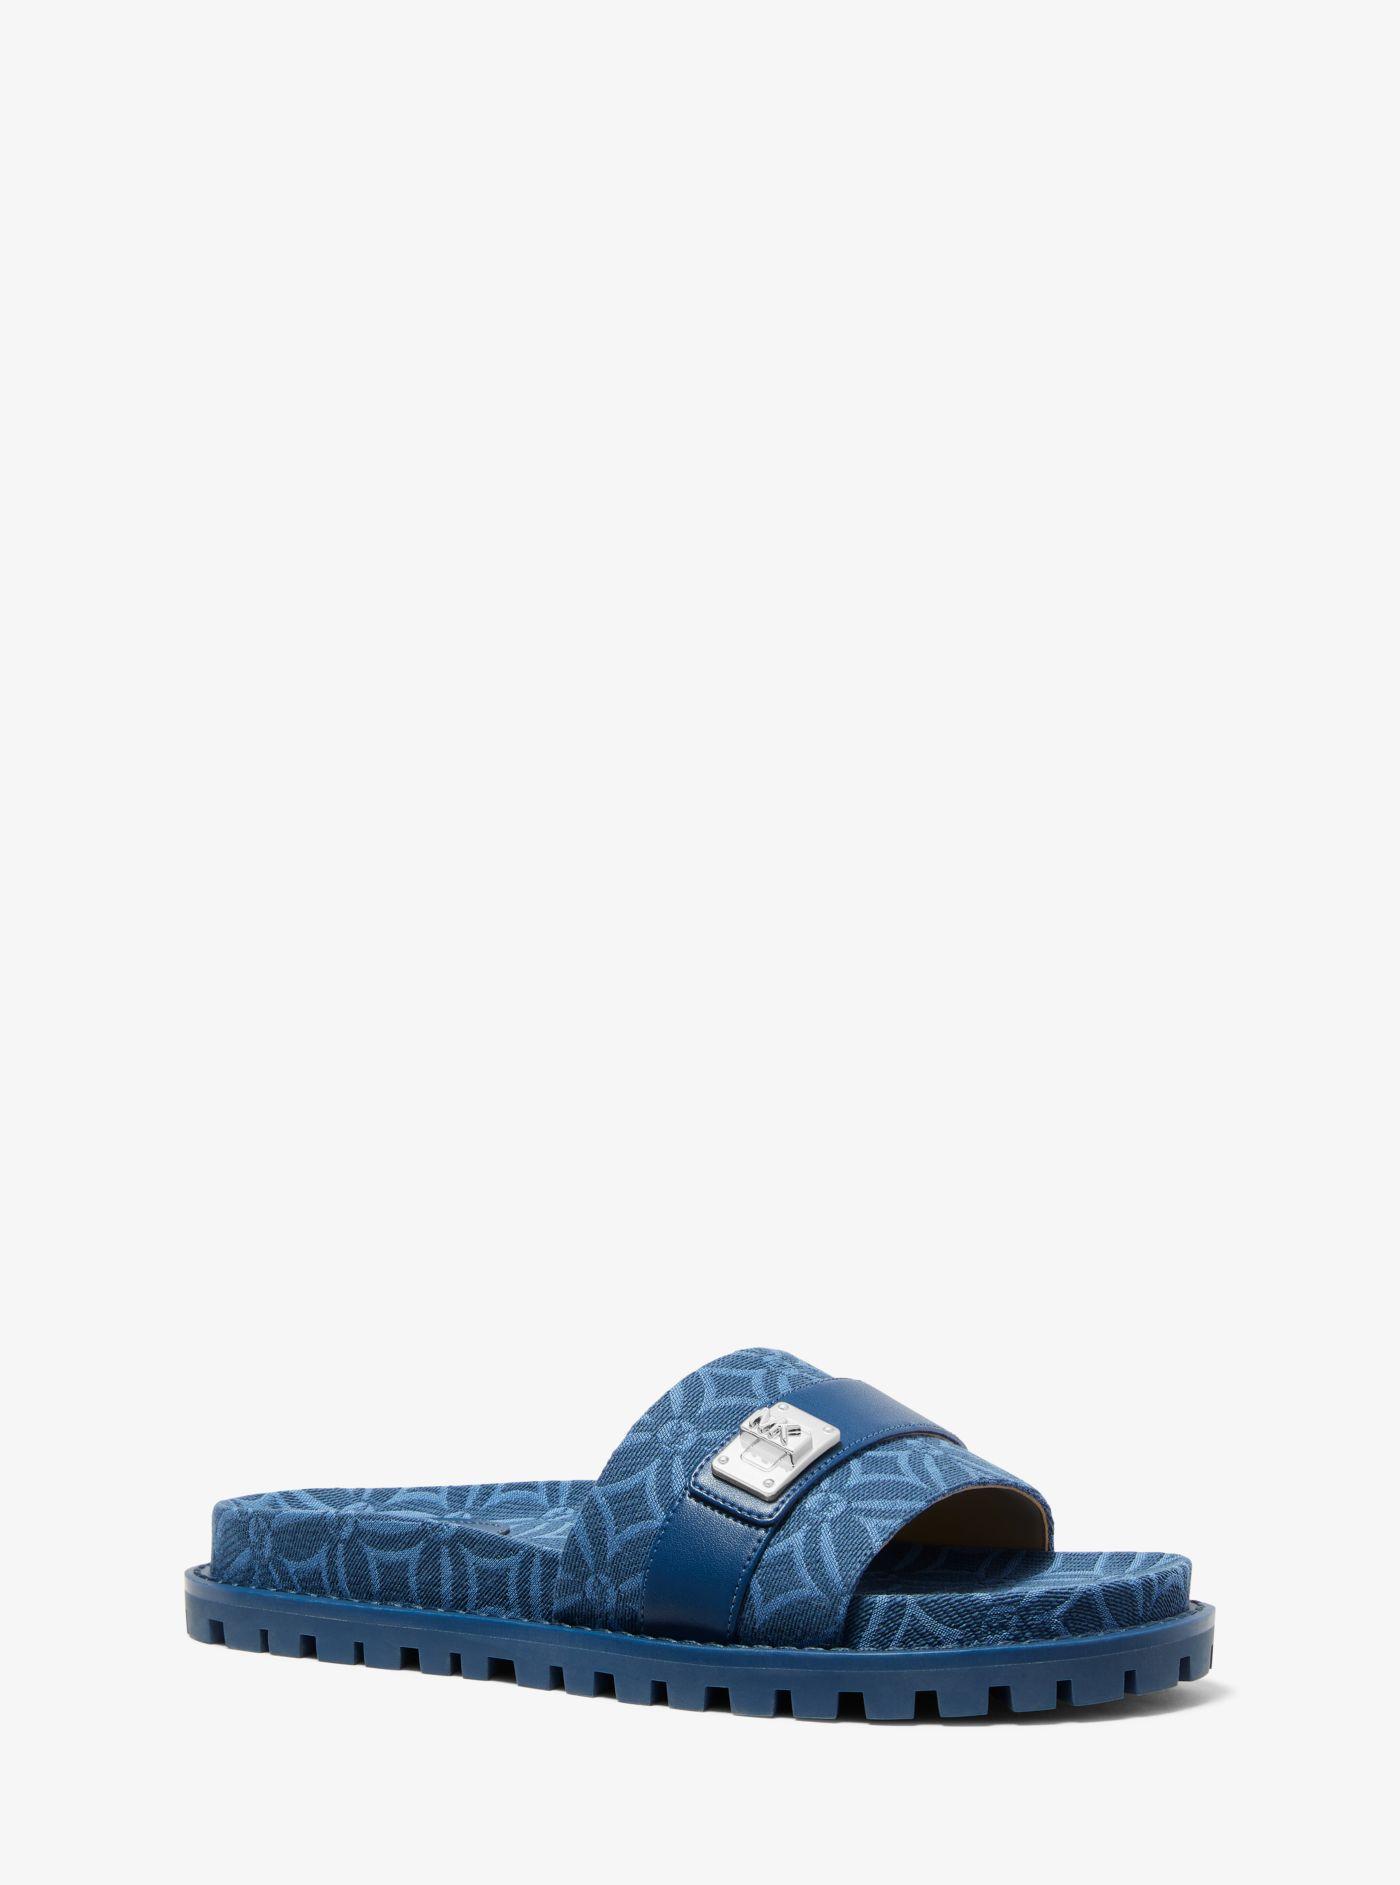 Michael Kors Padma Logo Jacquard Slide Sandal in Blue | Lyst Canada